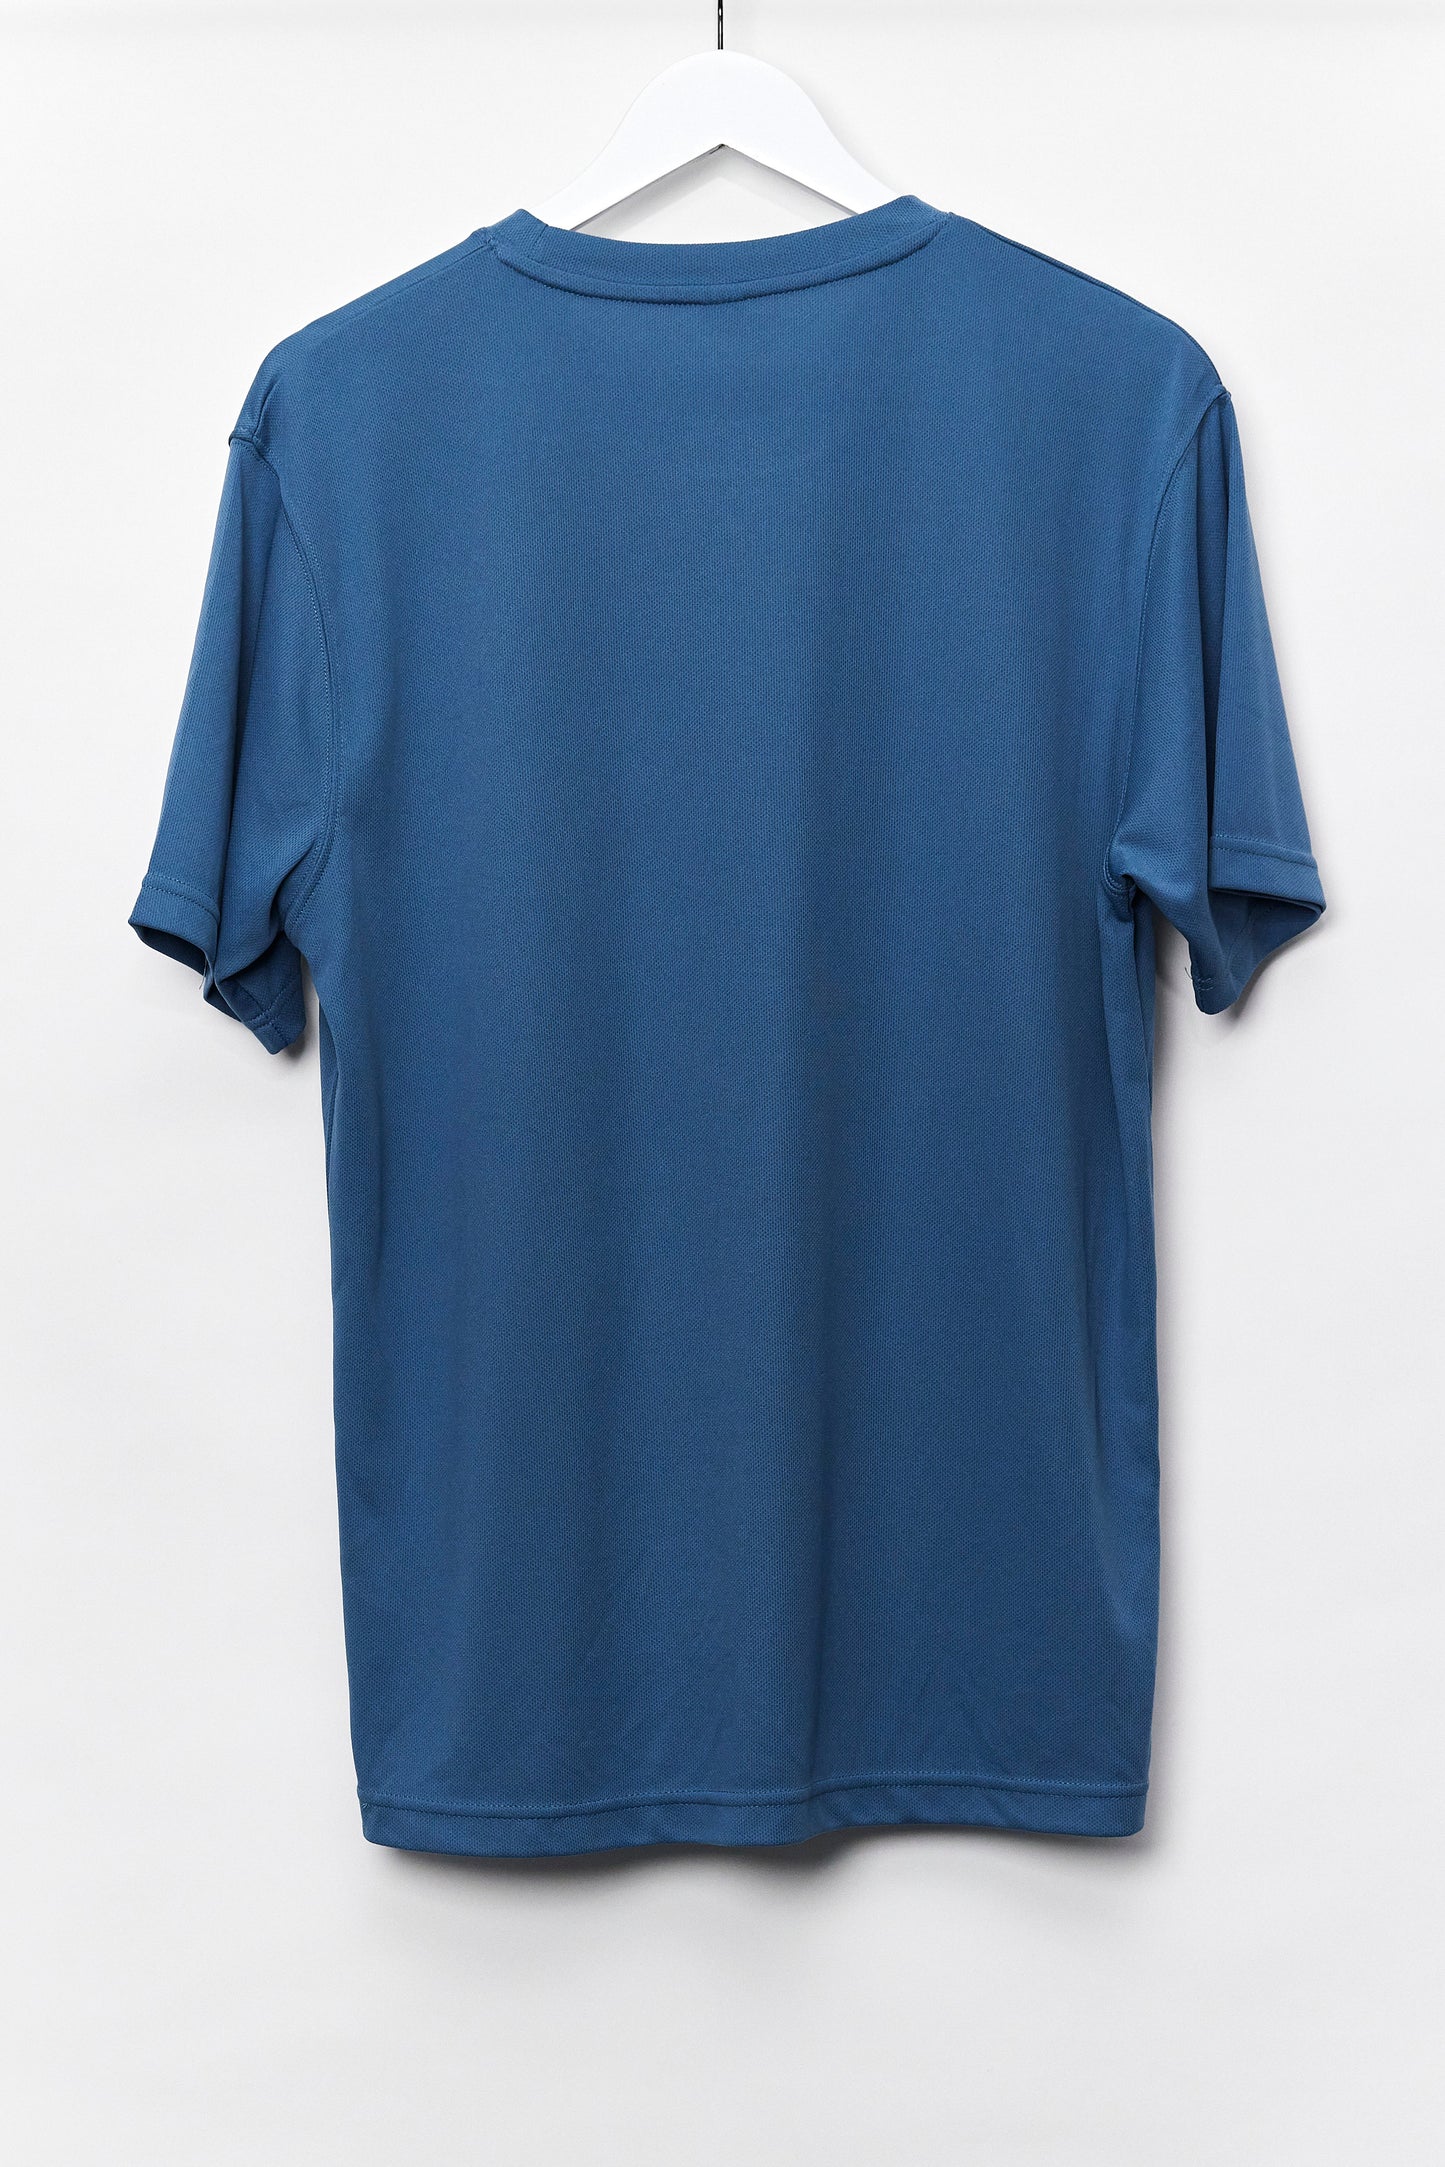 Mens Blue Sport T-shirt Size Large